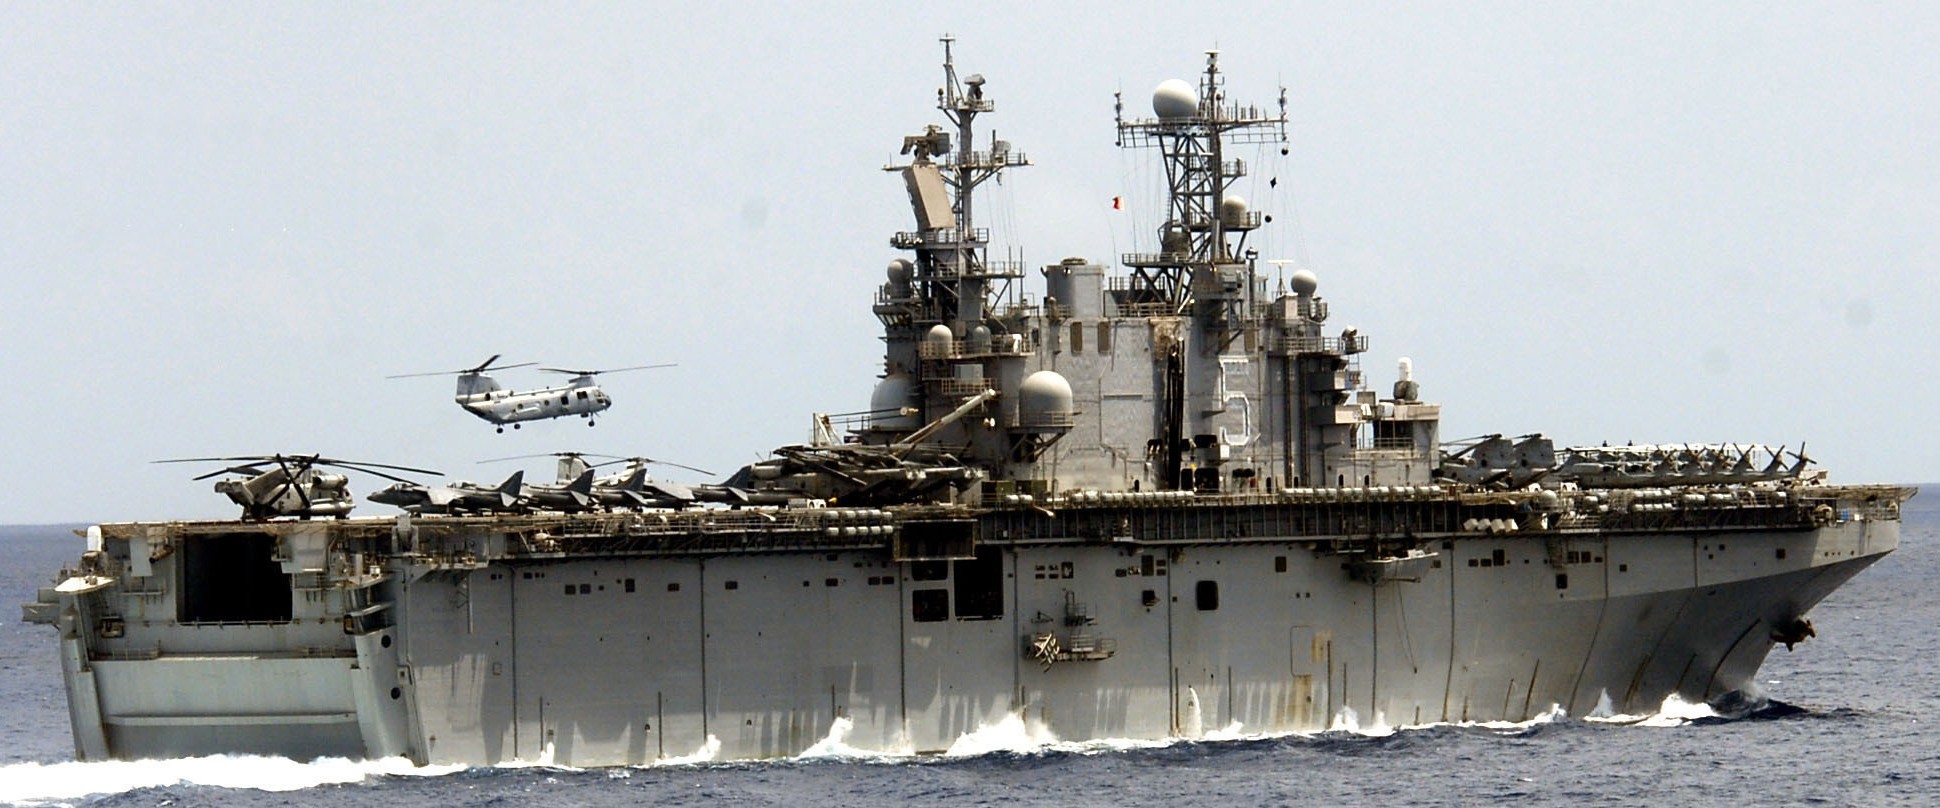 lha-5 uss peleliu tarawa class amphibious assault ship landing helicopter us navy hmm-364(rein) marines 80